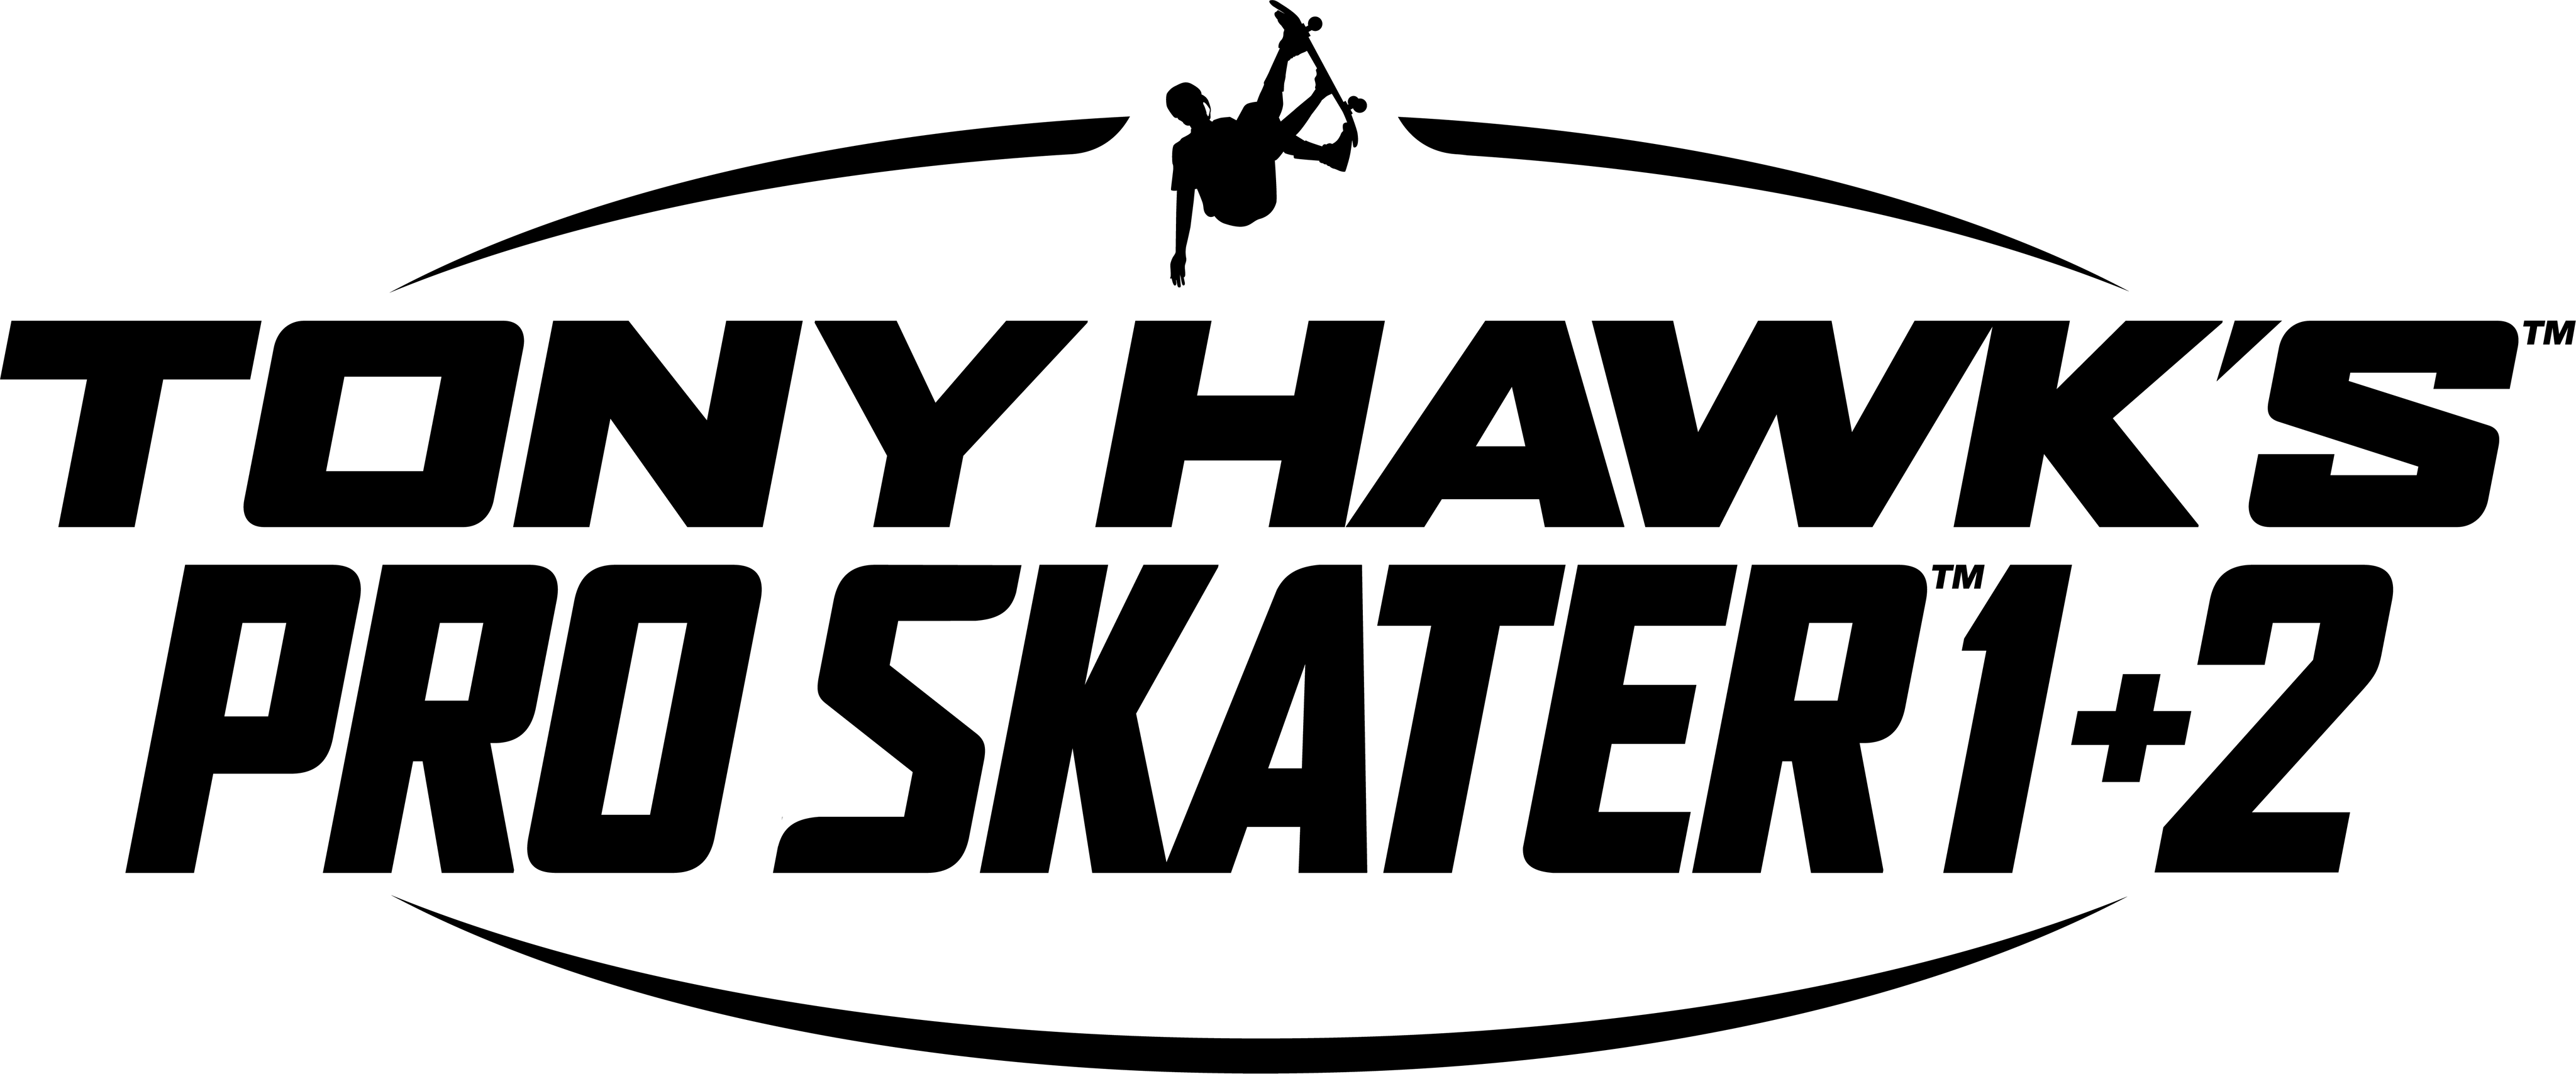 Buy Tony Hawk's™ Pro Skater™ 1 + 2 - The Birdman Pack